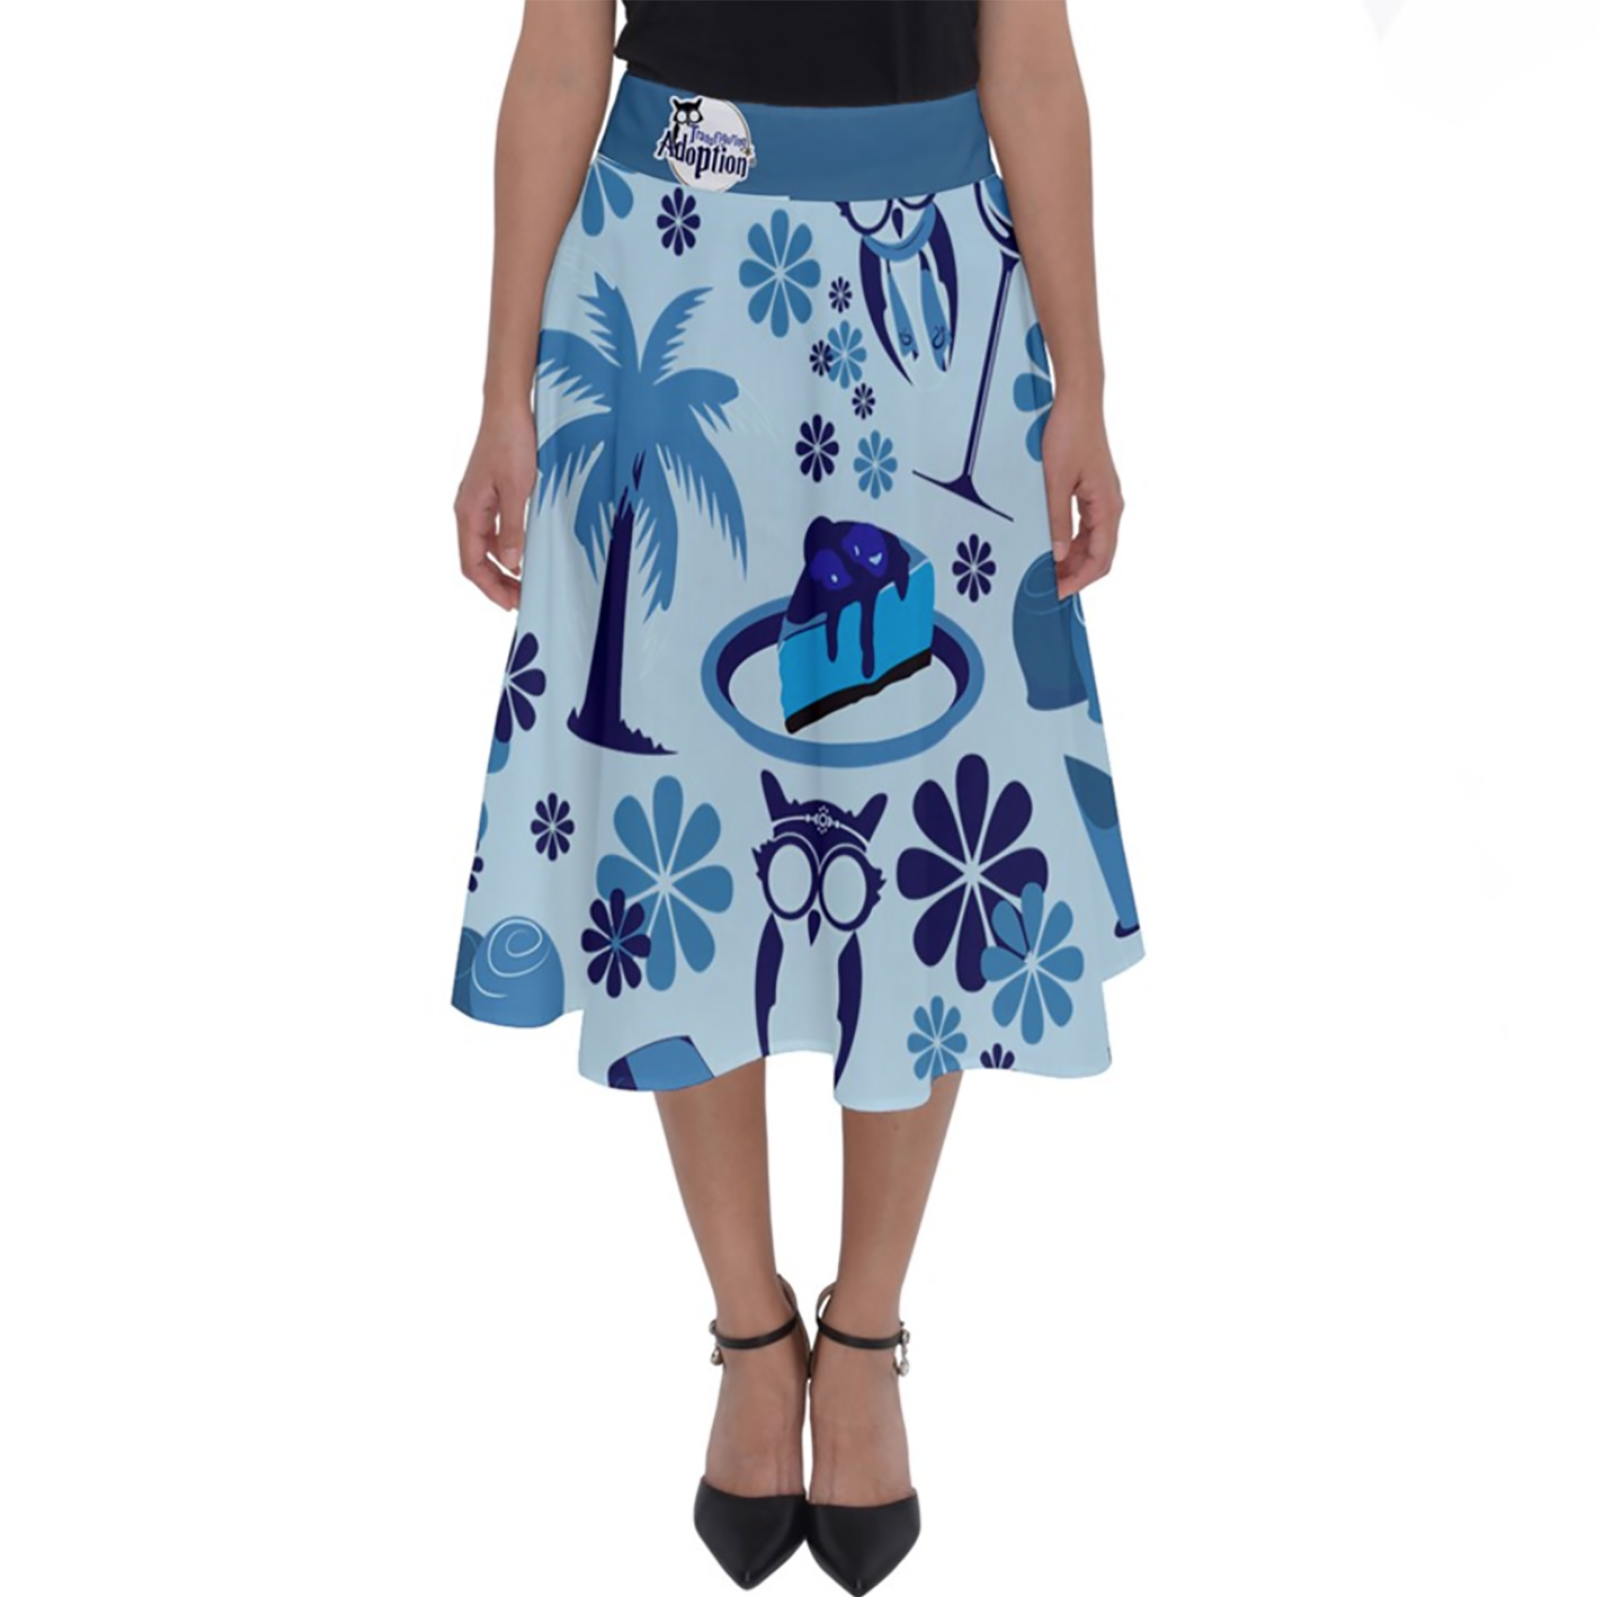 Self-Care Perfect Length Midi Skirt (Blue)